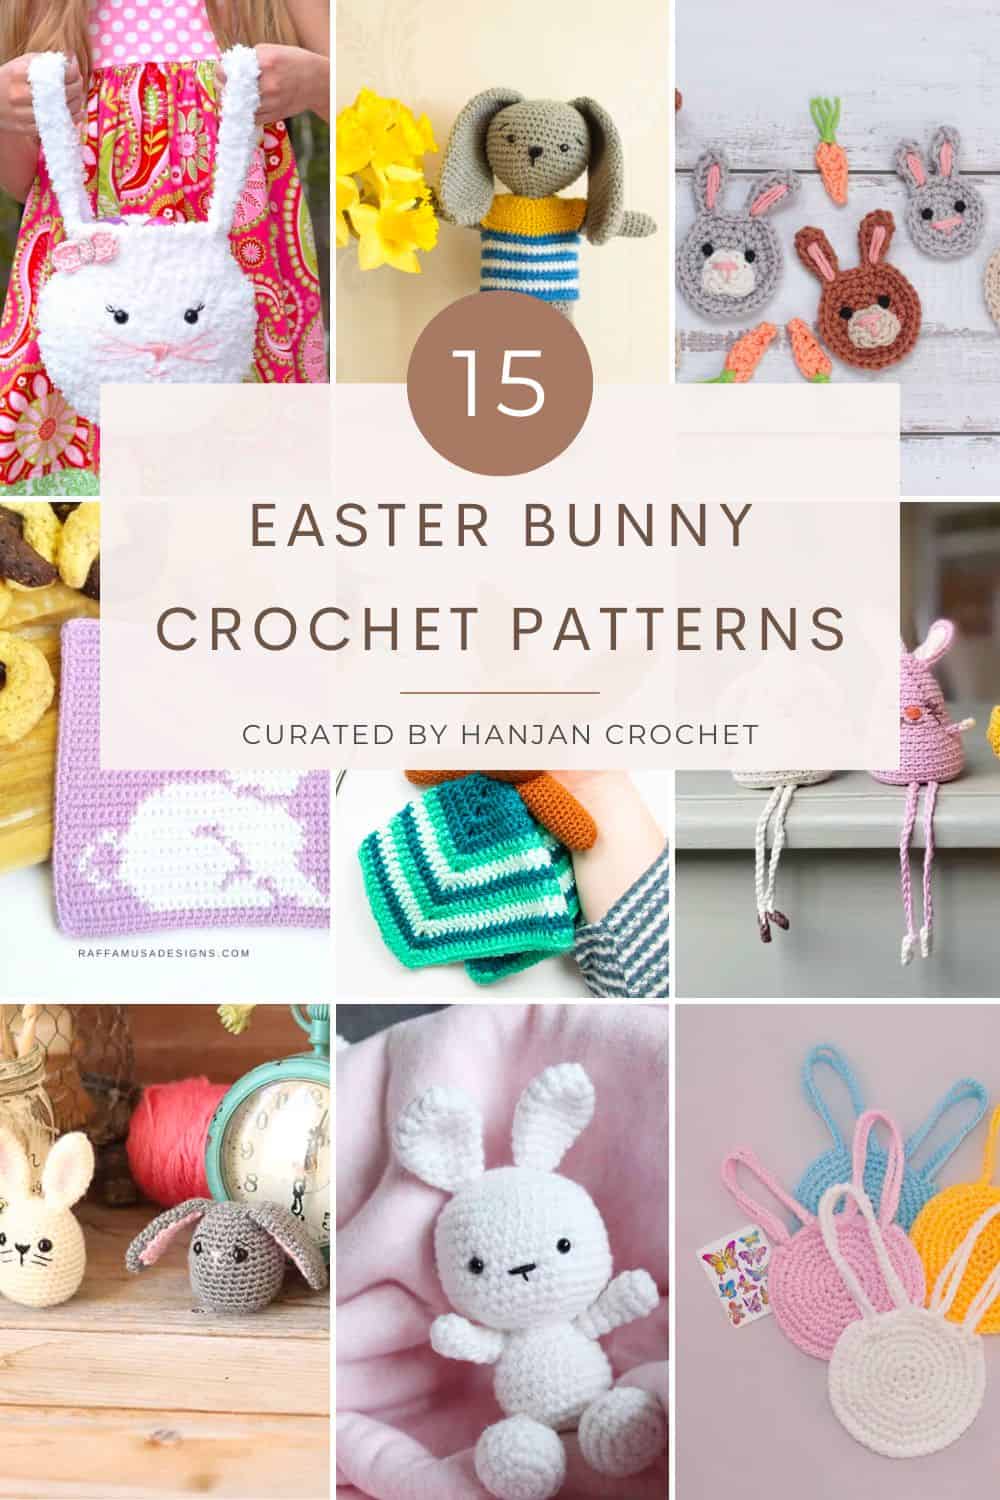 15 Easter Bunny Crochet Patterns.